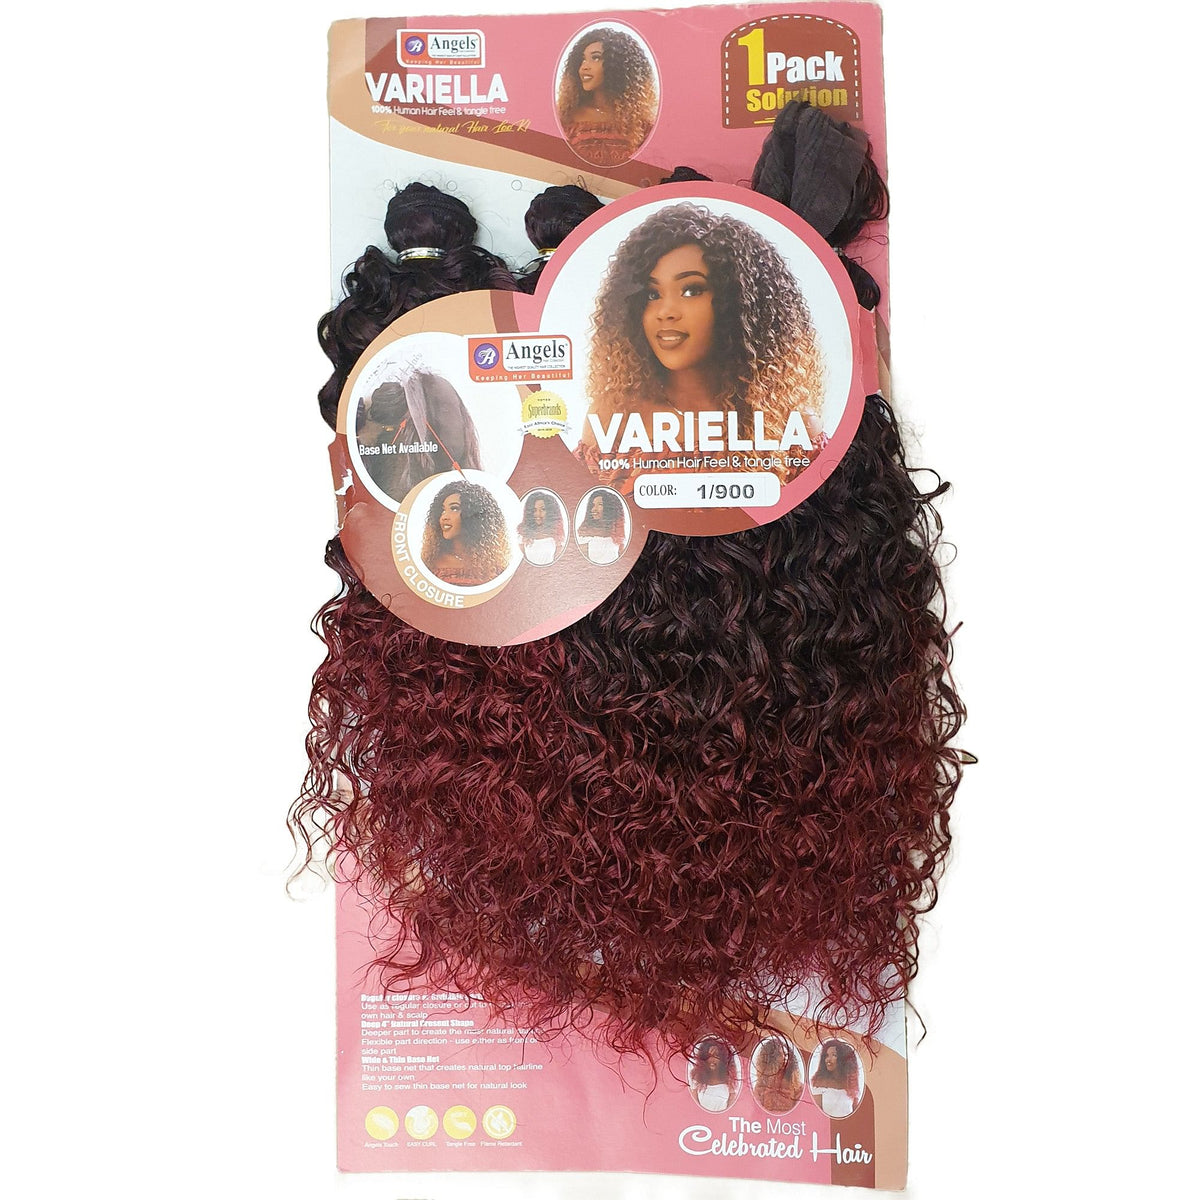 Variella Weave Colour 1/900 - Black / Maroon - Weave